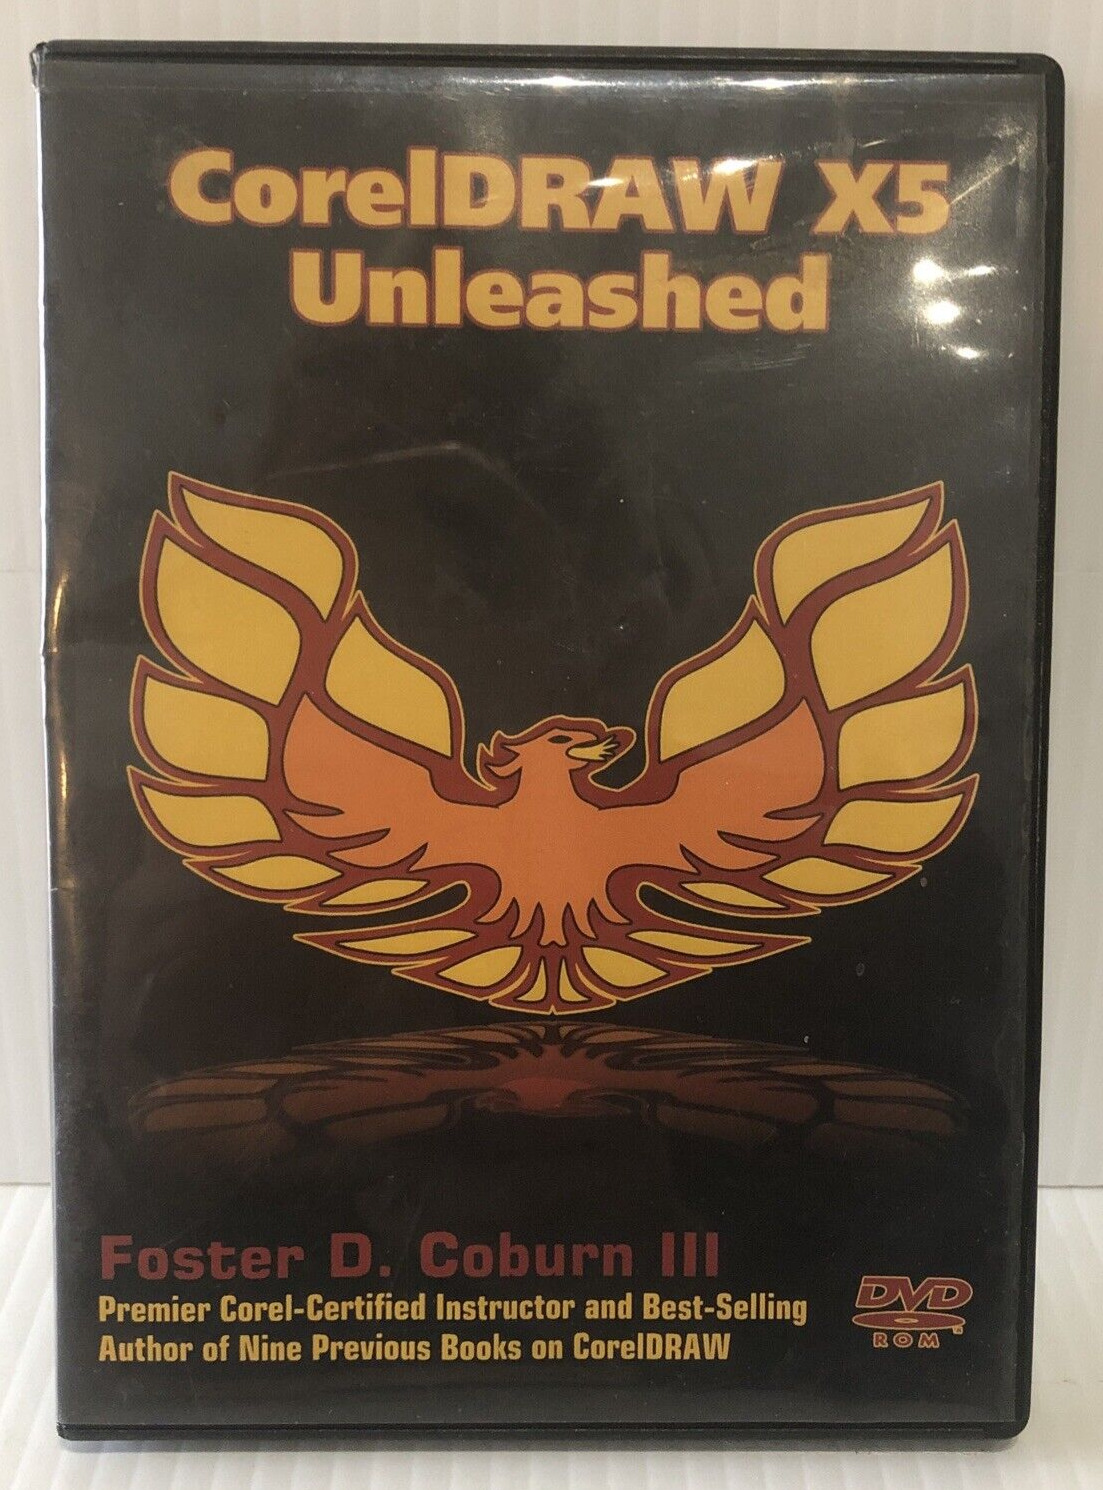 CorelDRAW X5 Unleashed DVD by Foster D Coburn III